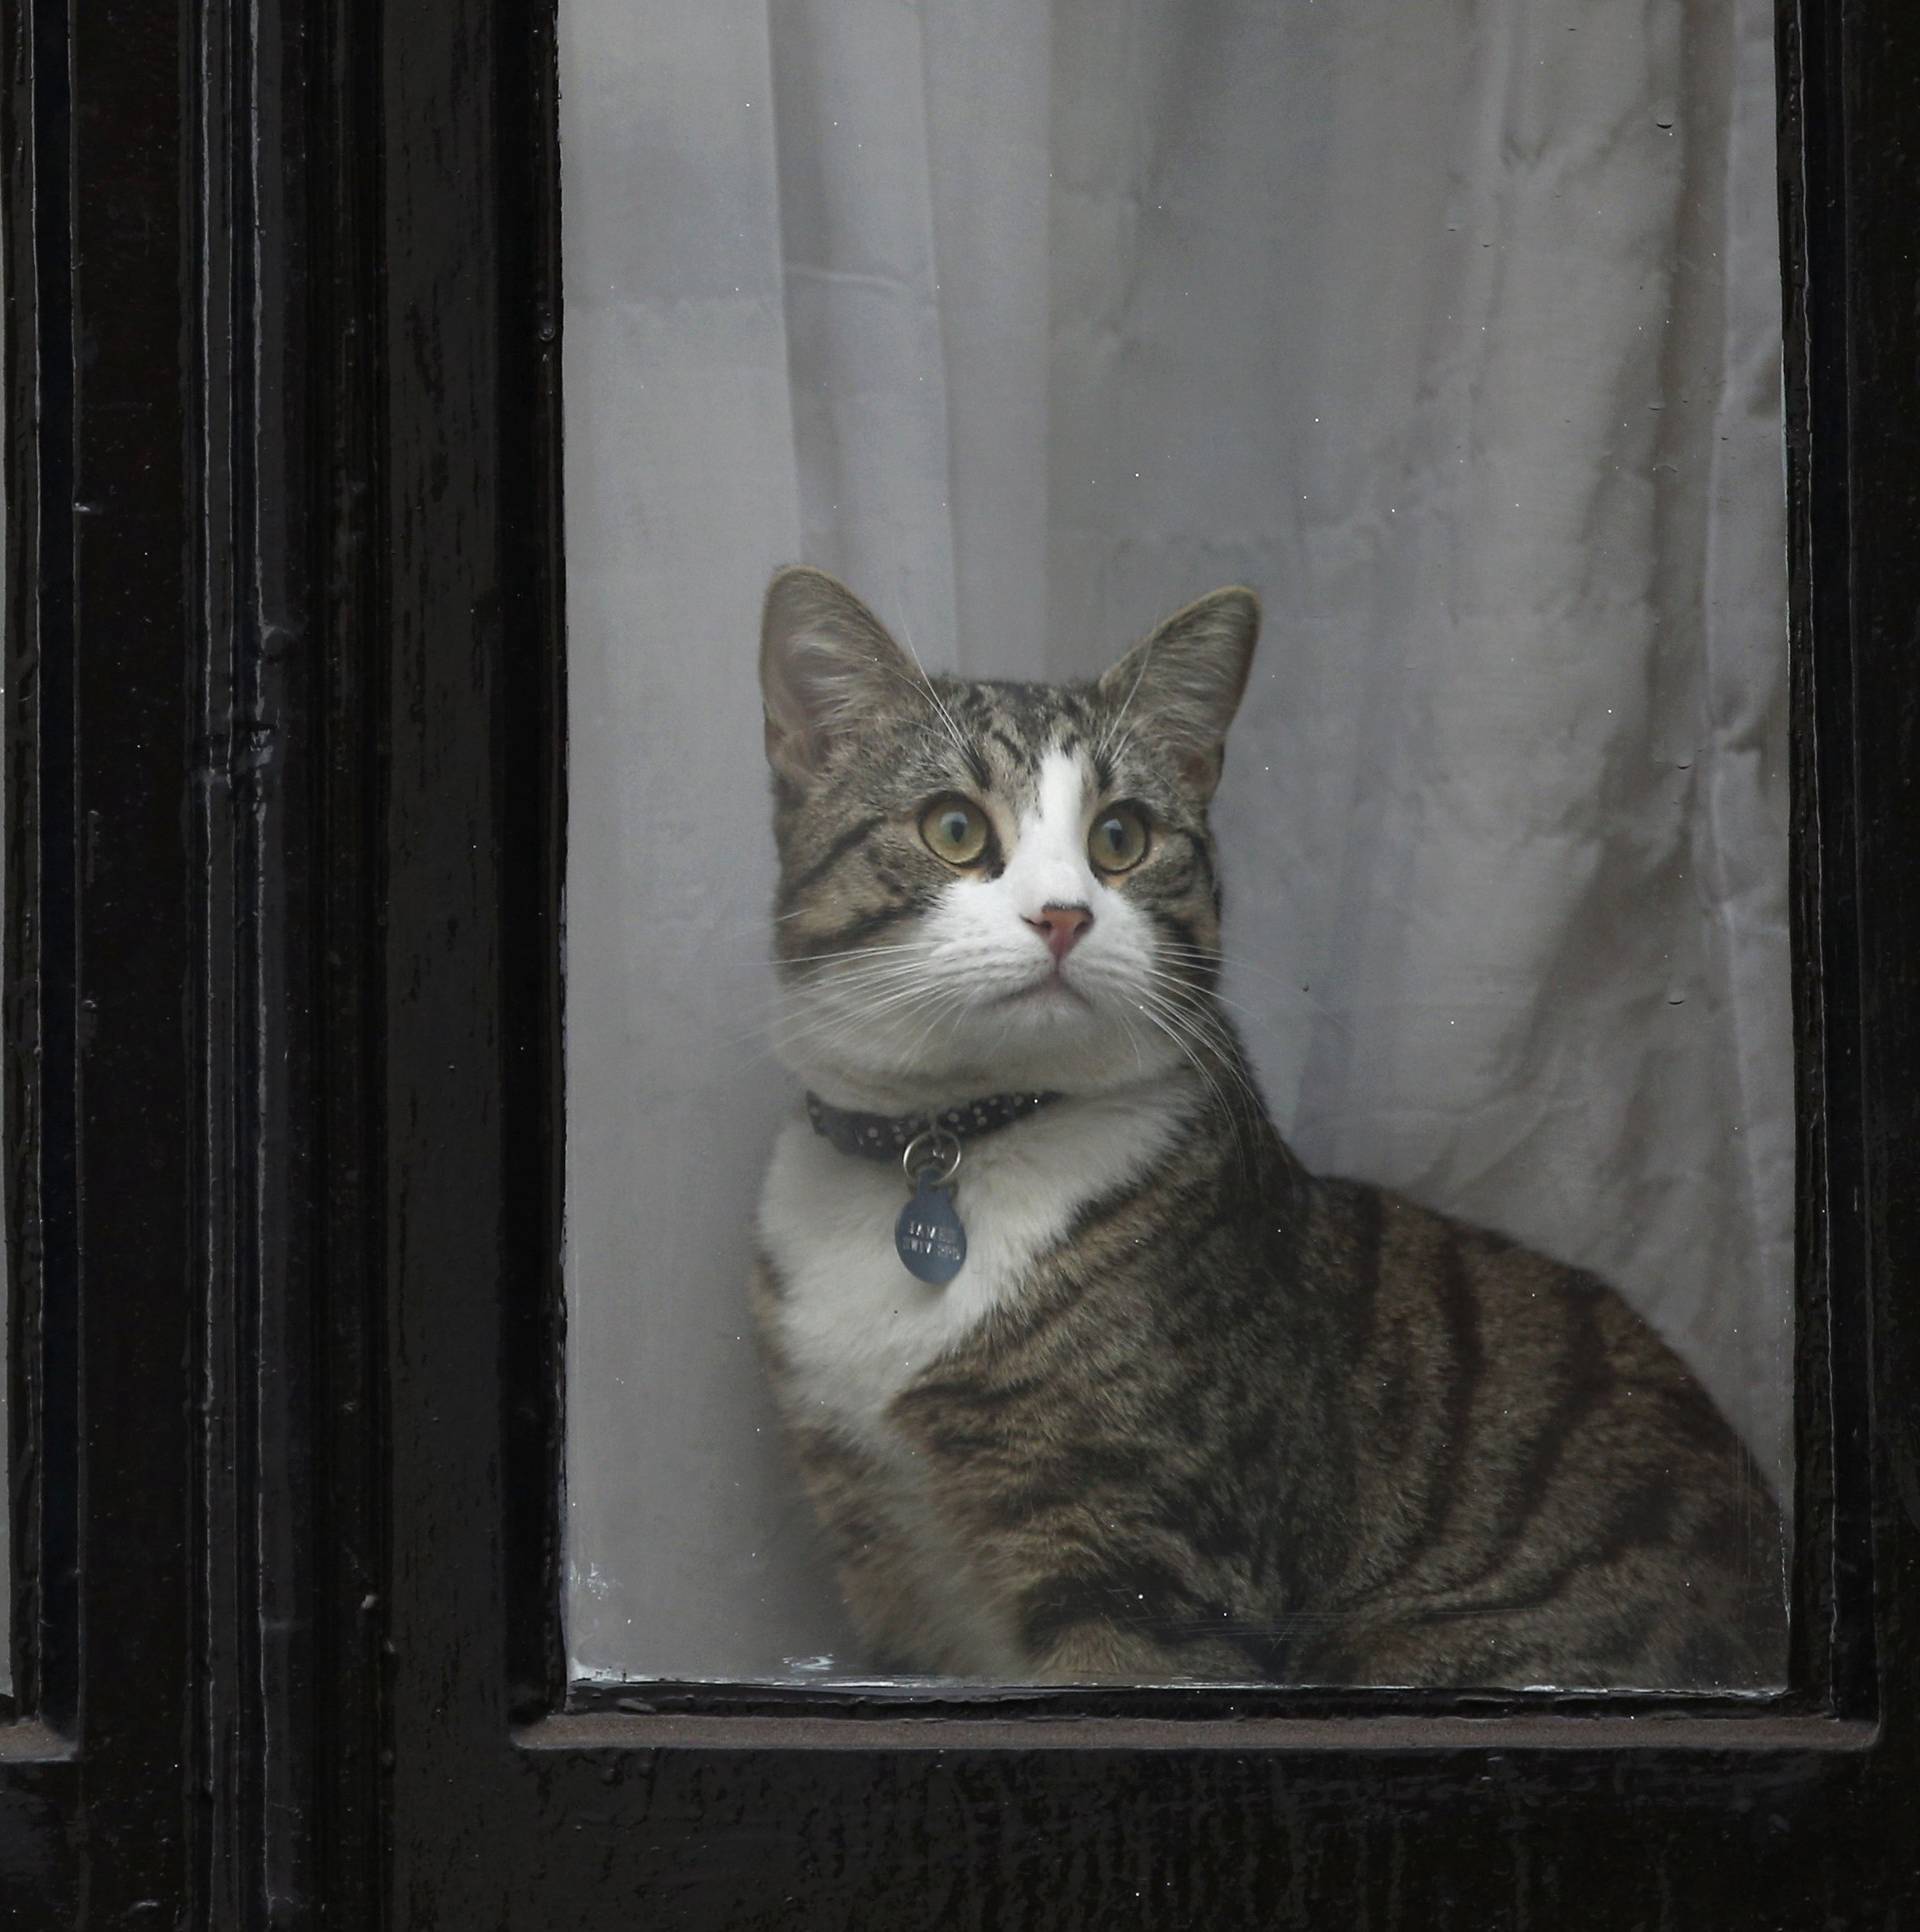 Julian Assange's cat sits at the window of Ecuador's embassy as prosecutor Ingrid Isgren from Sweden interviews Assange in London